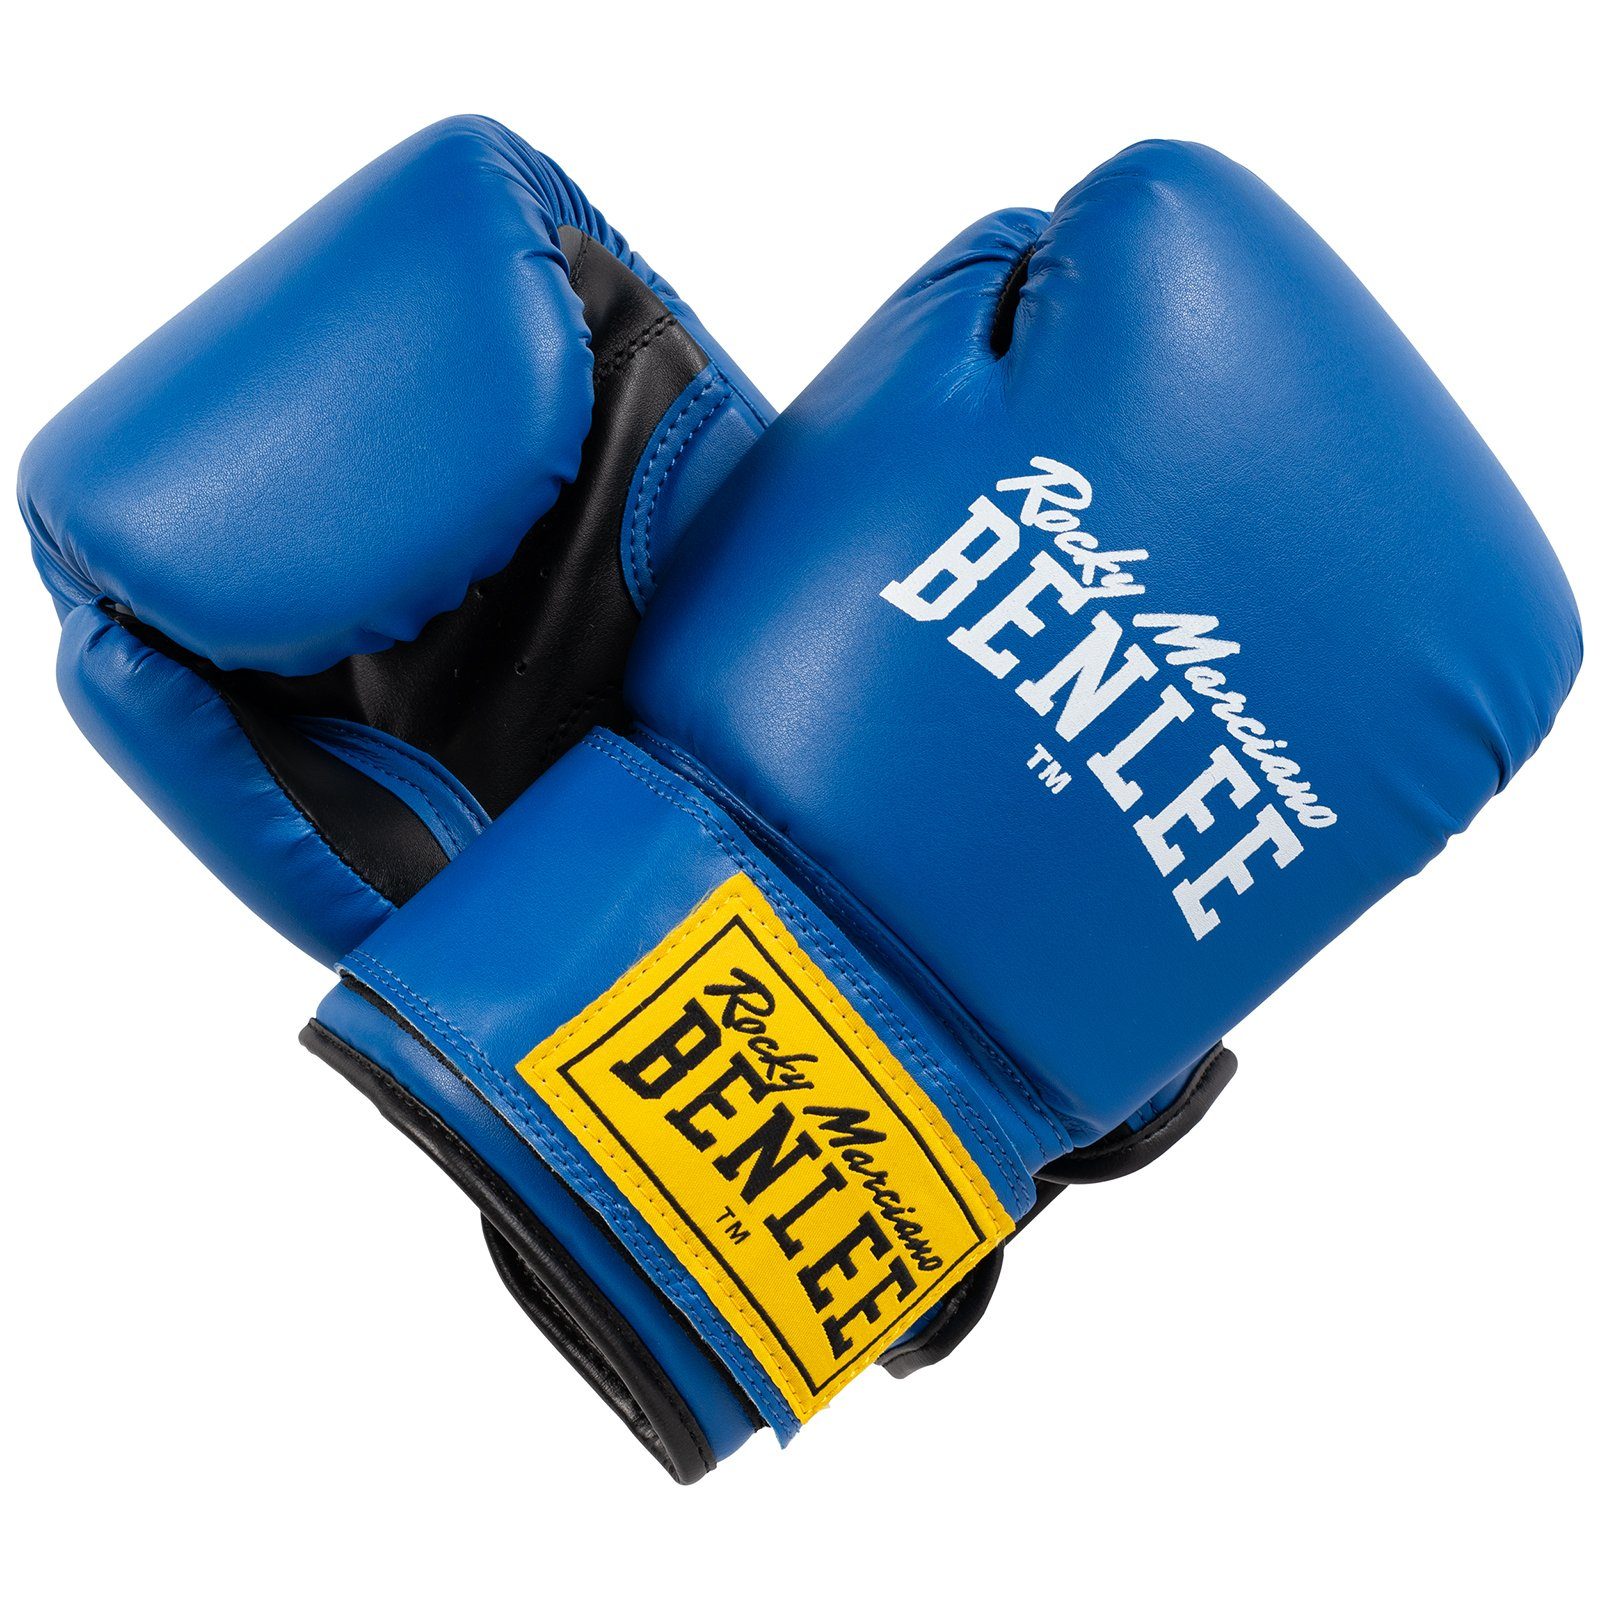 Blue/Black Boxhandschuhe Benlee RODNEY Marciano Rocky